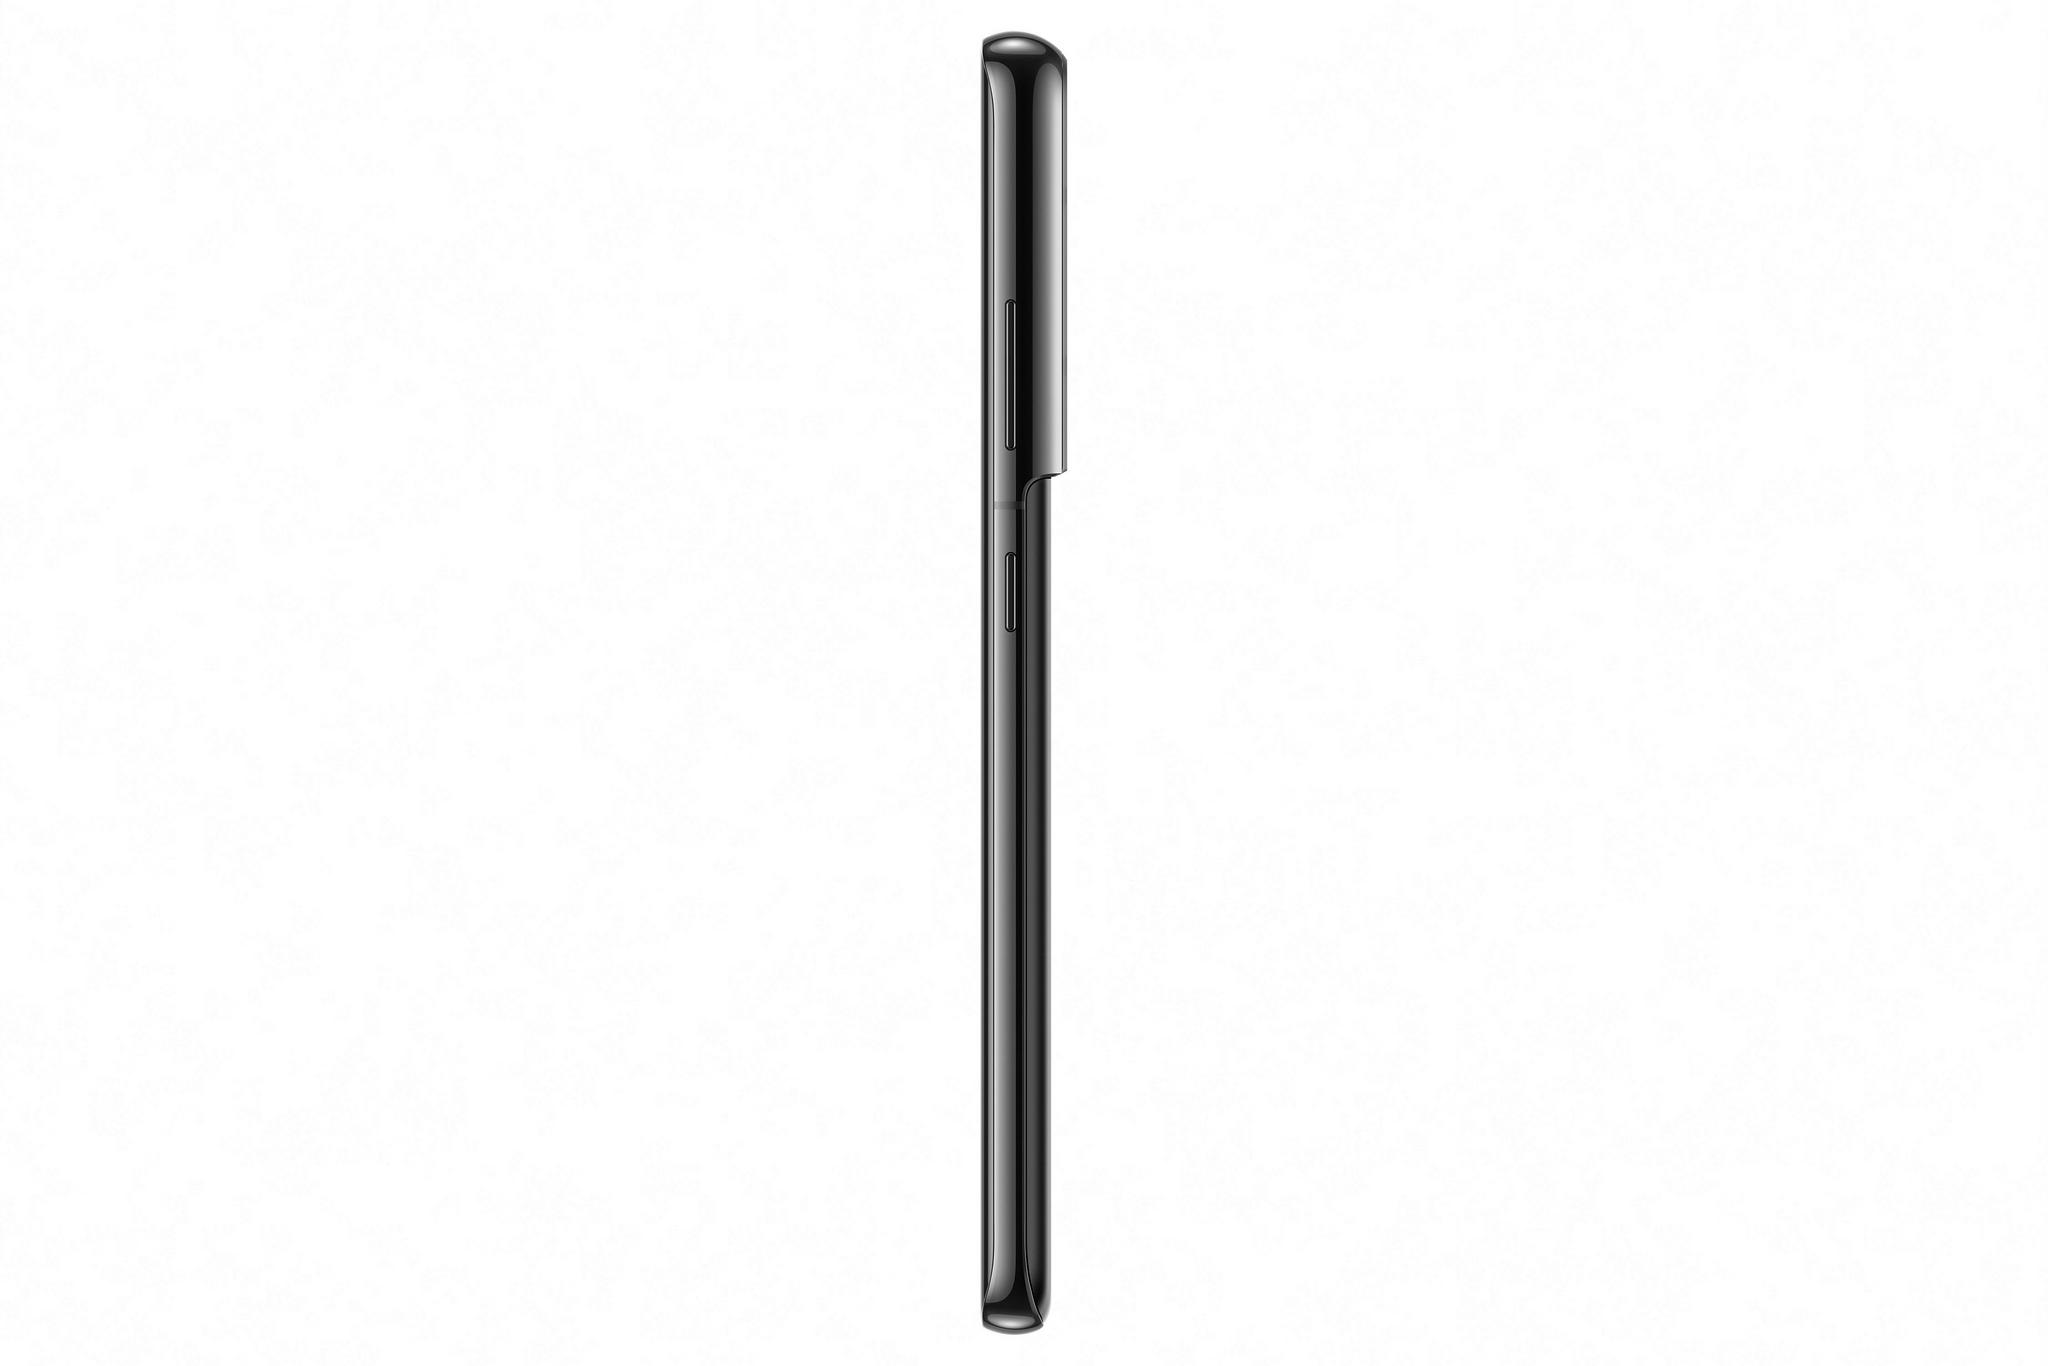 Samsung Galaxy S21 Ultra 5G 128GB Phone - Black